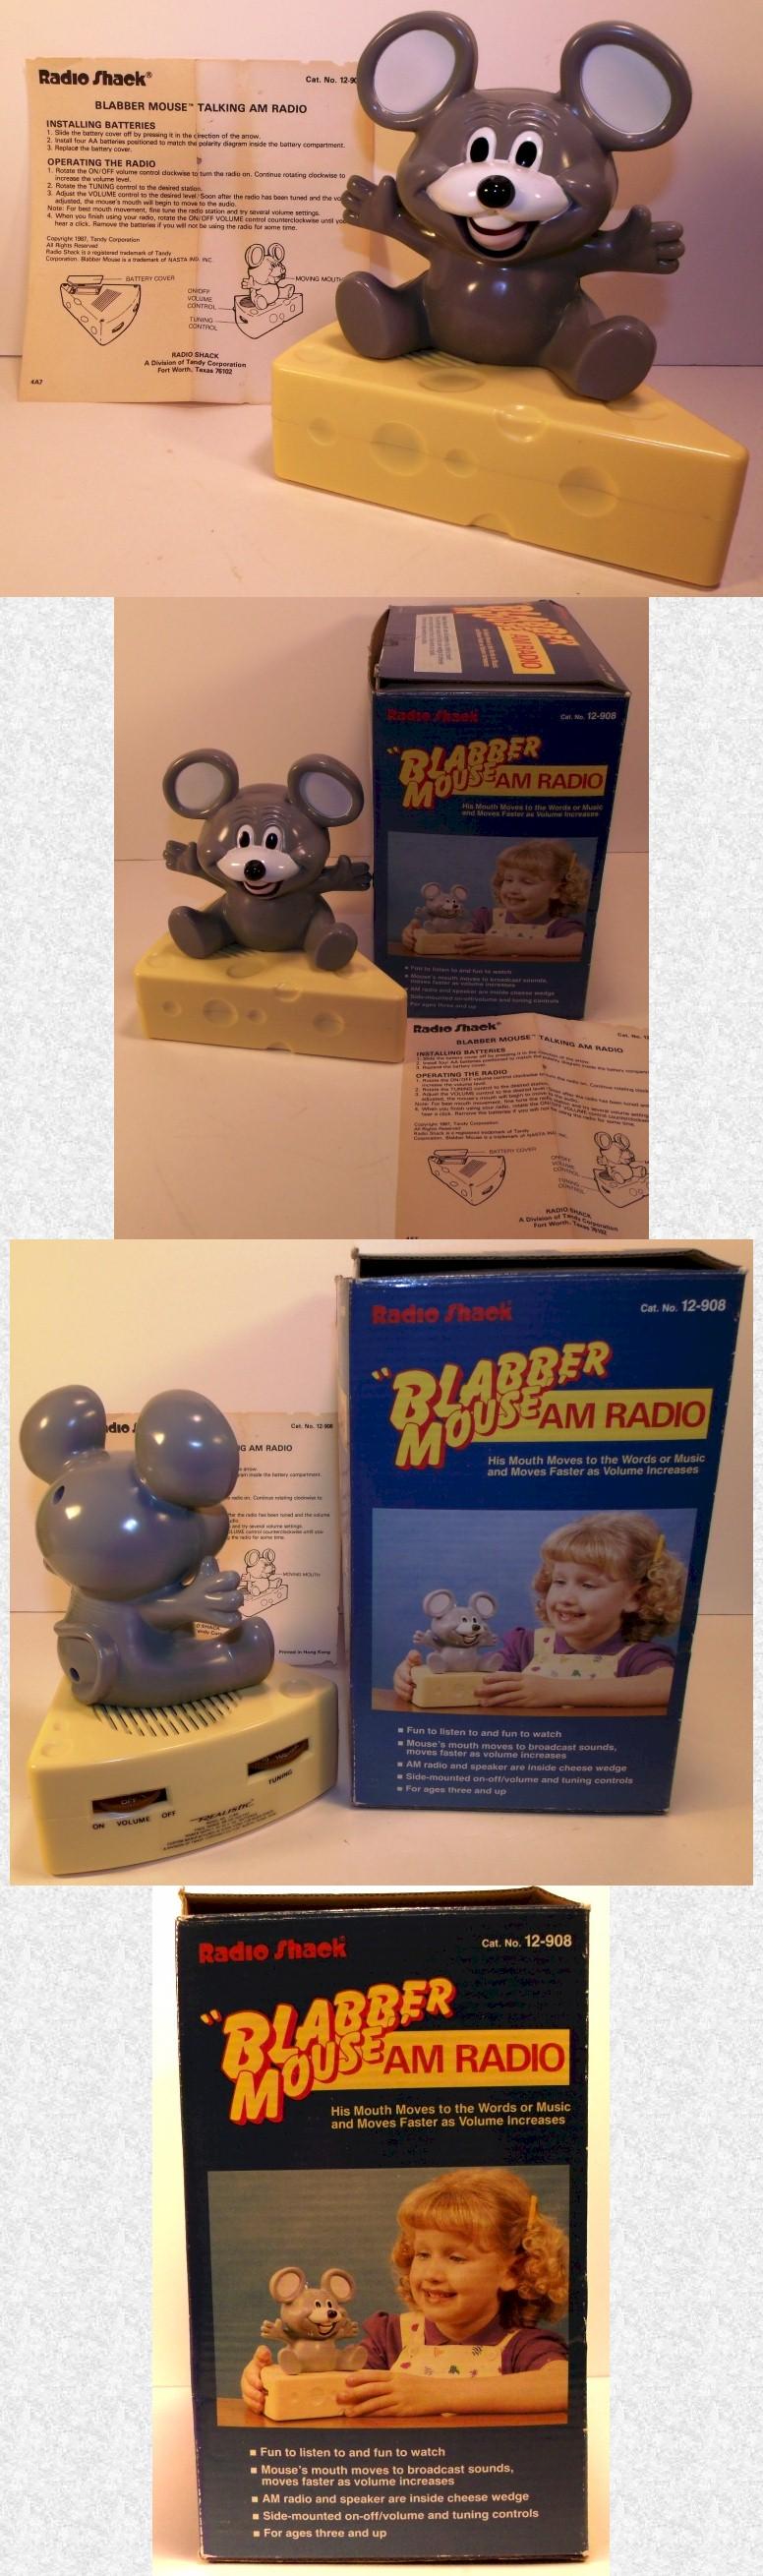 Blabber Mouse Radio by Radio Shack (1985)